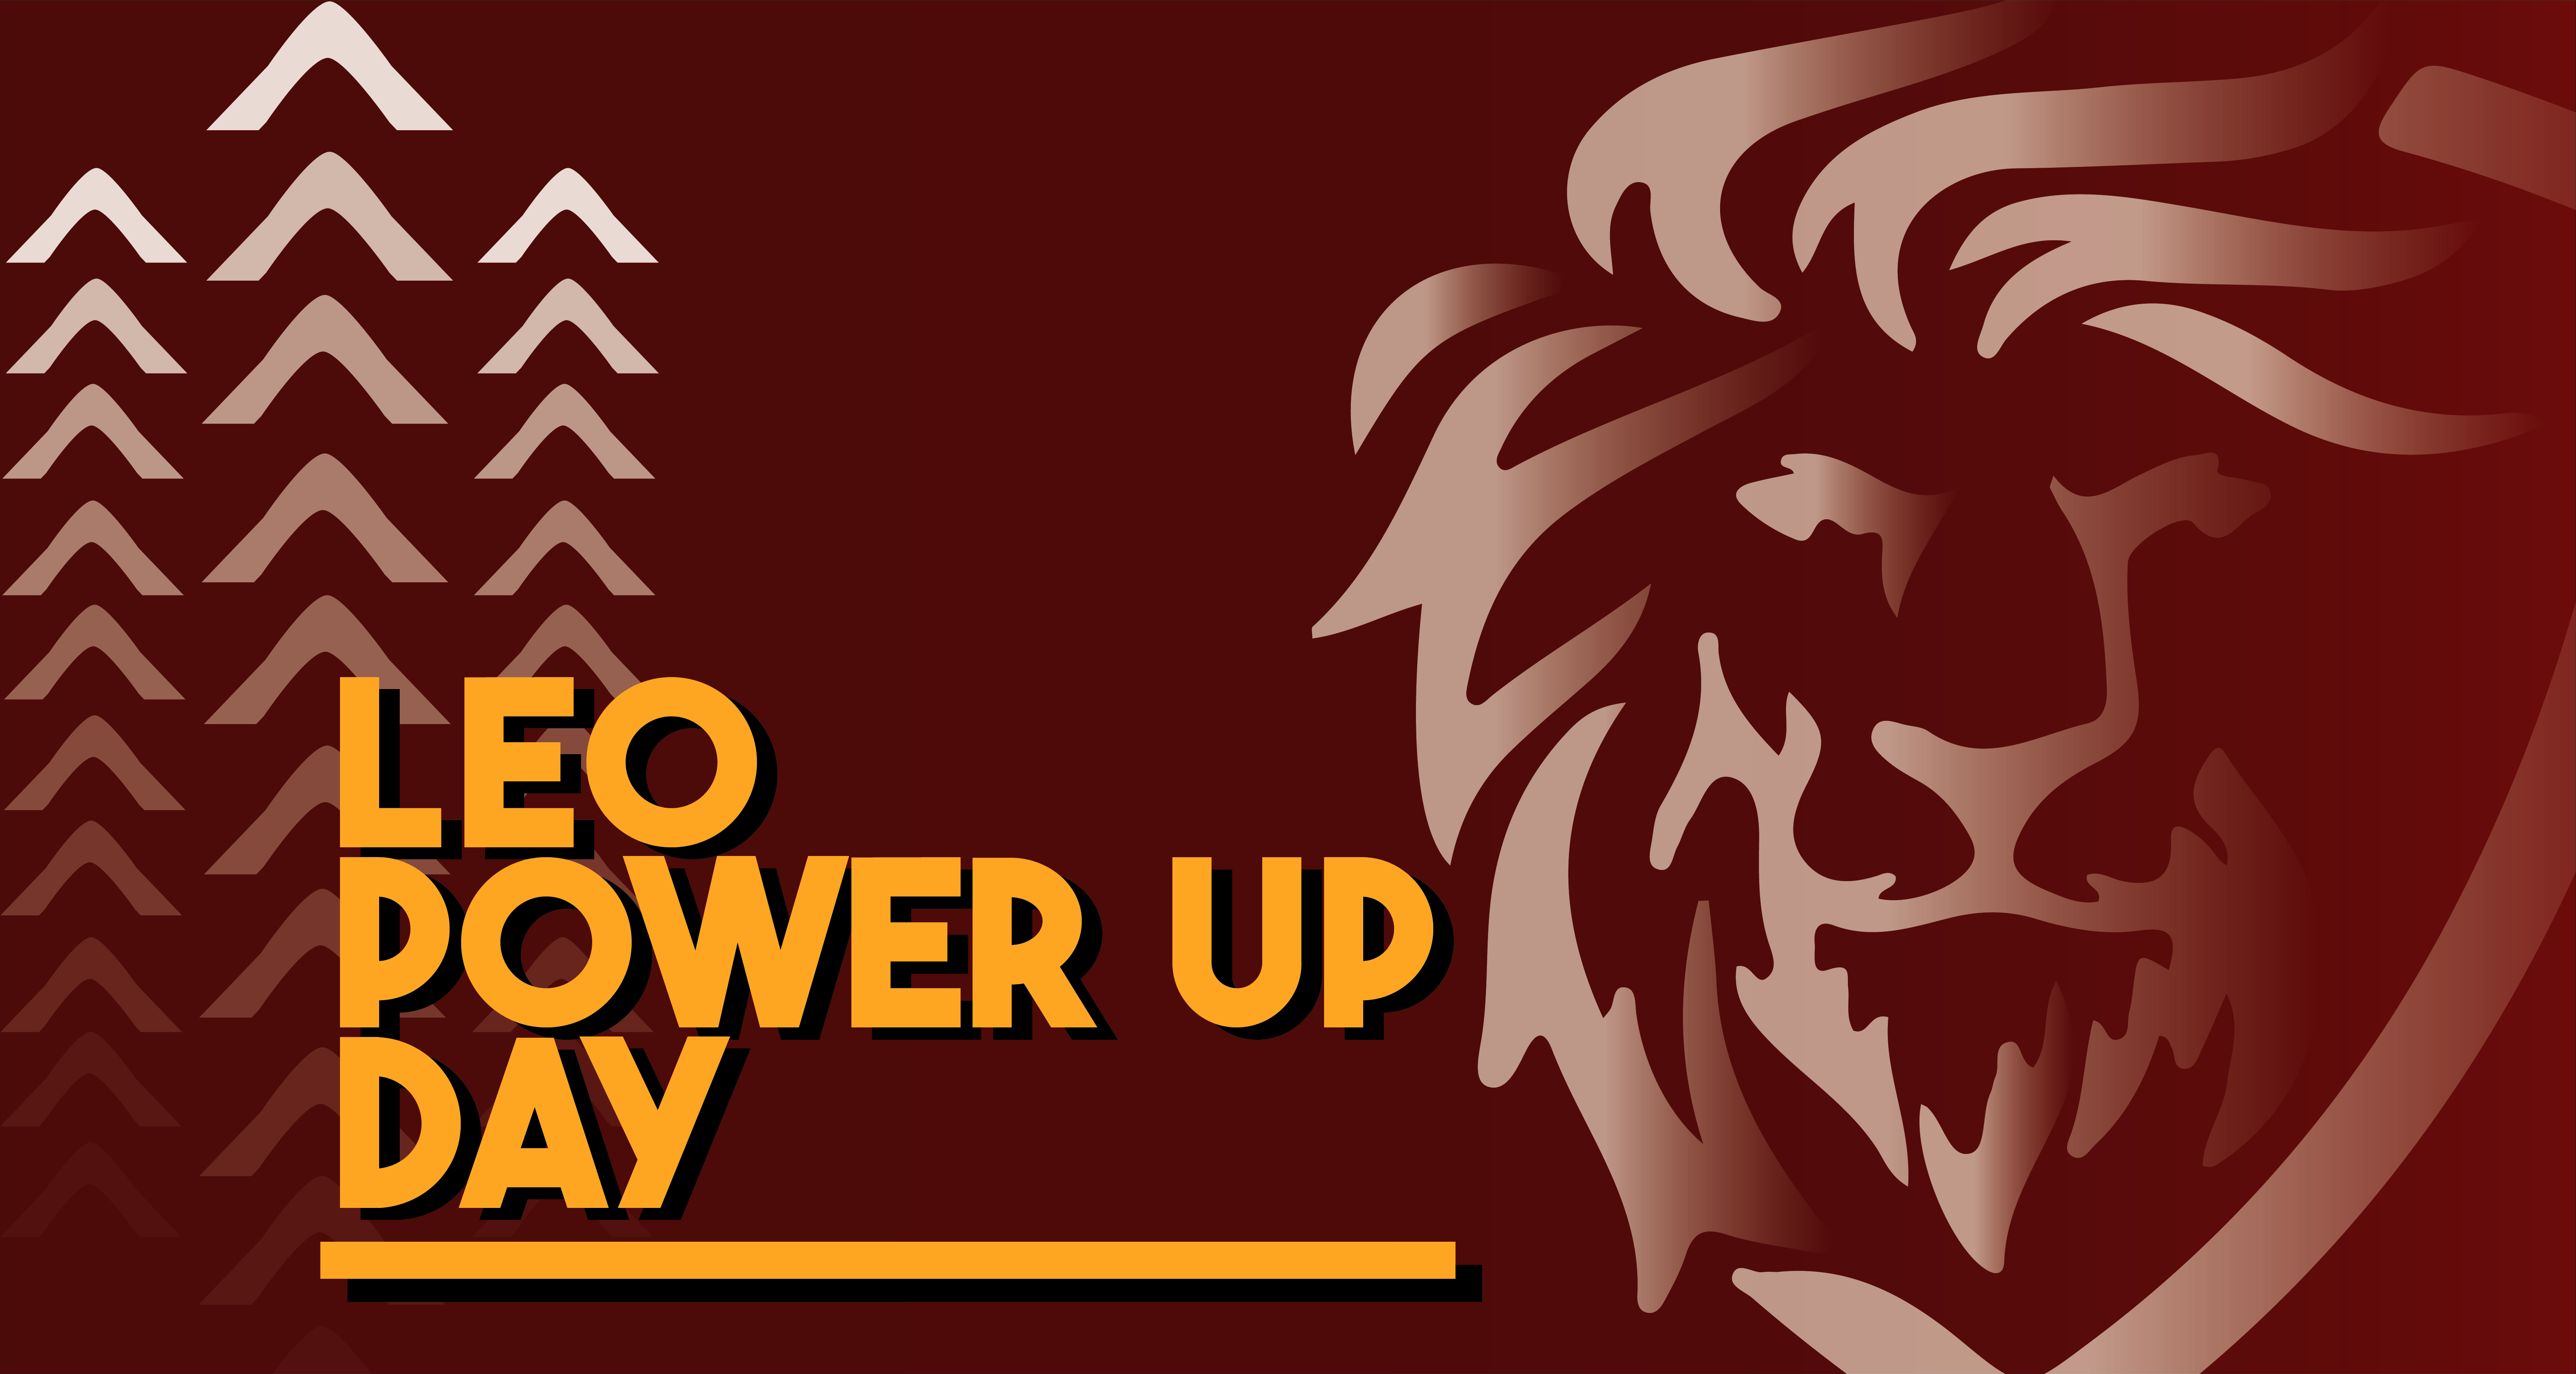 Leo Power Up Day